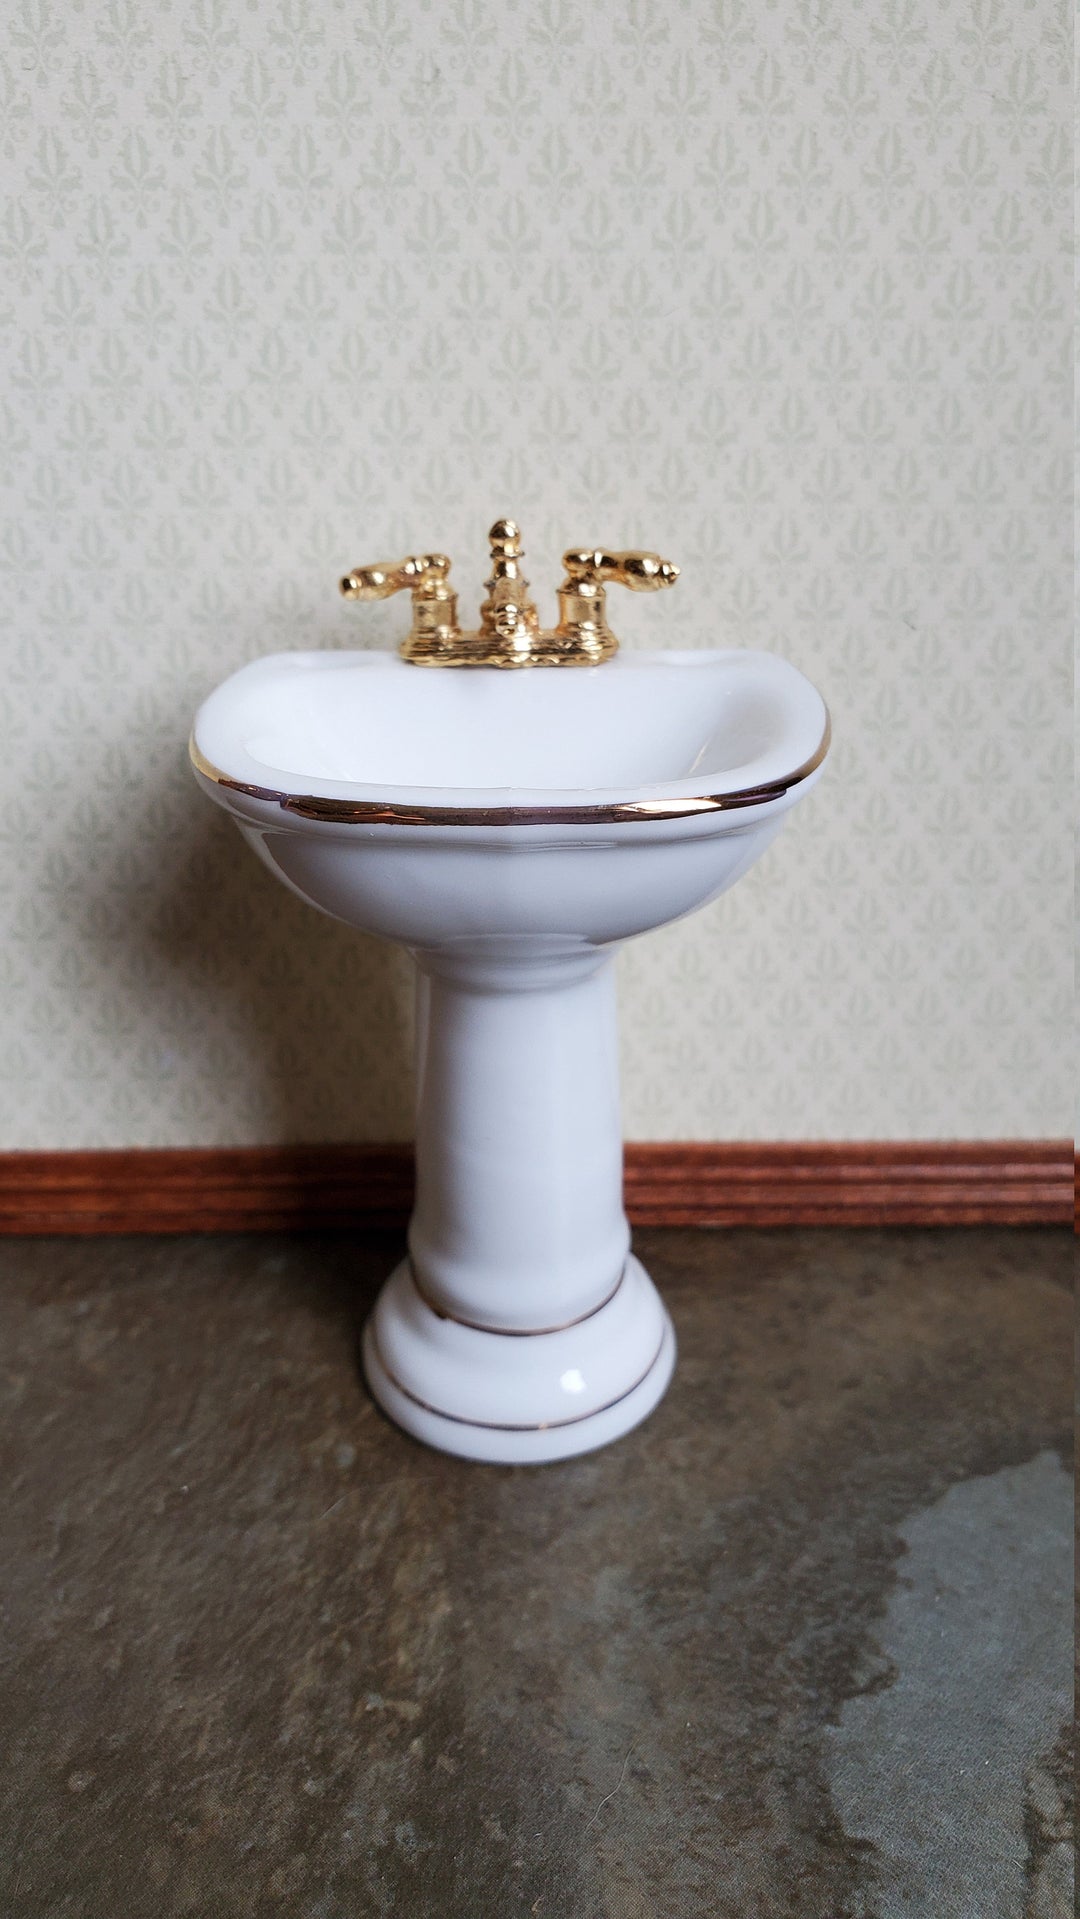 Dollhouse Miniature Pedestal Sink Bathroom White Reutter Porcelain 1:12 Scale